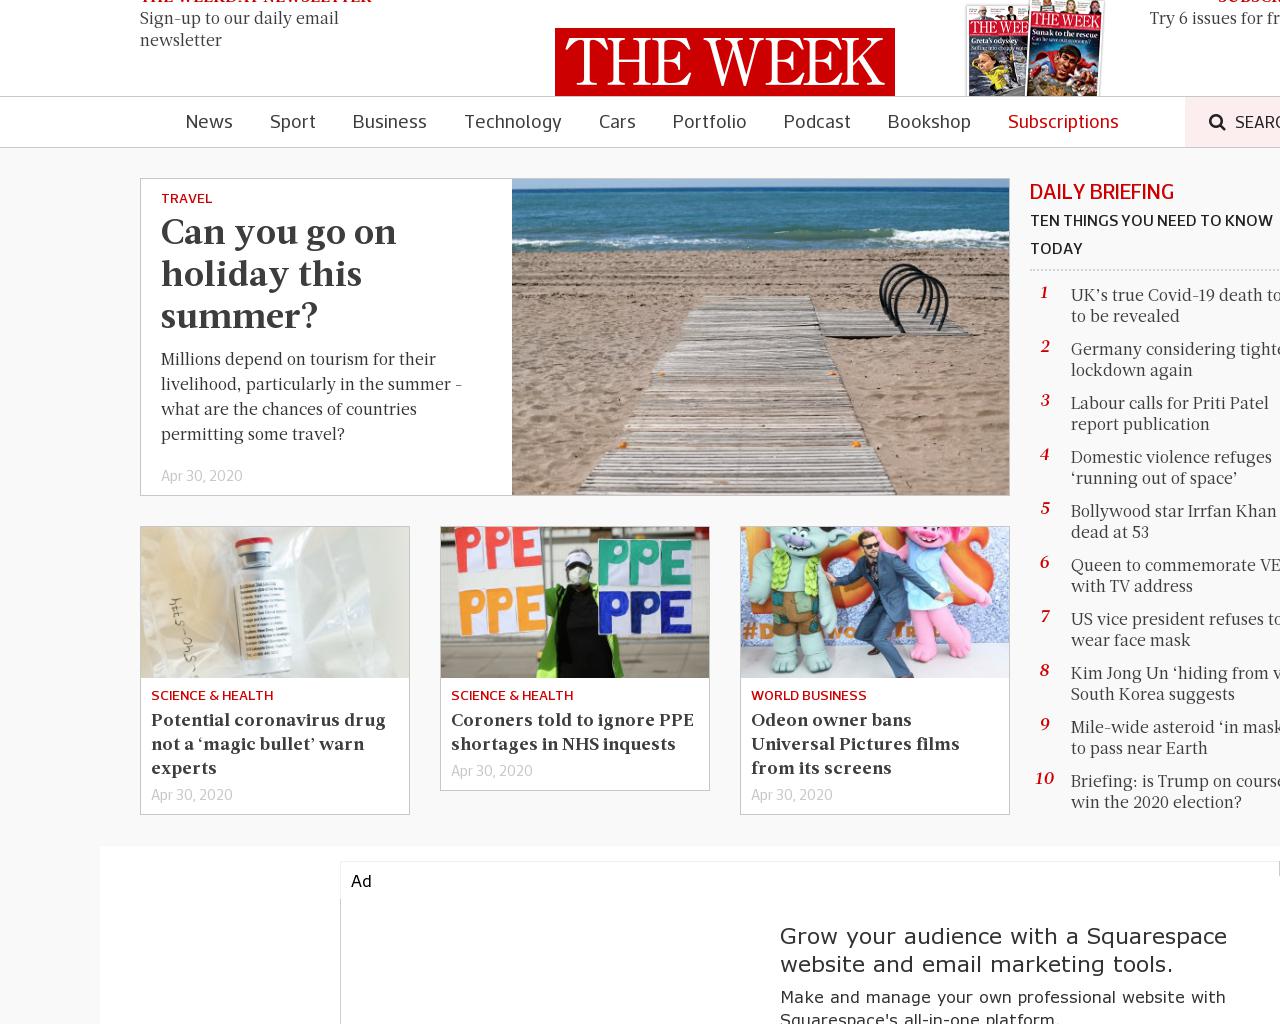 theweek.co.uk